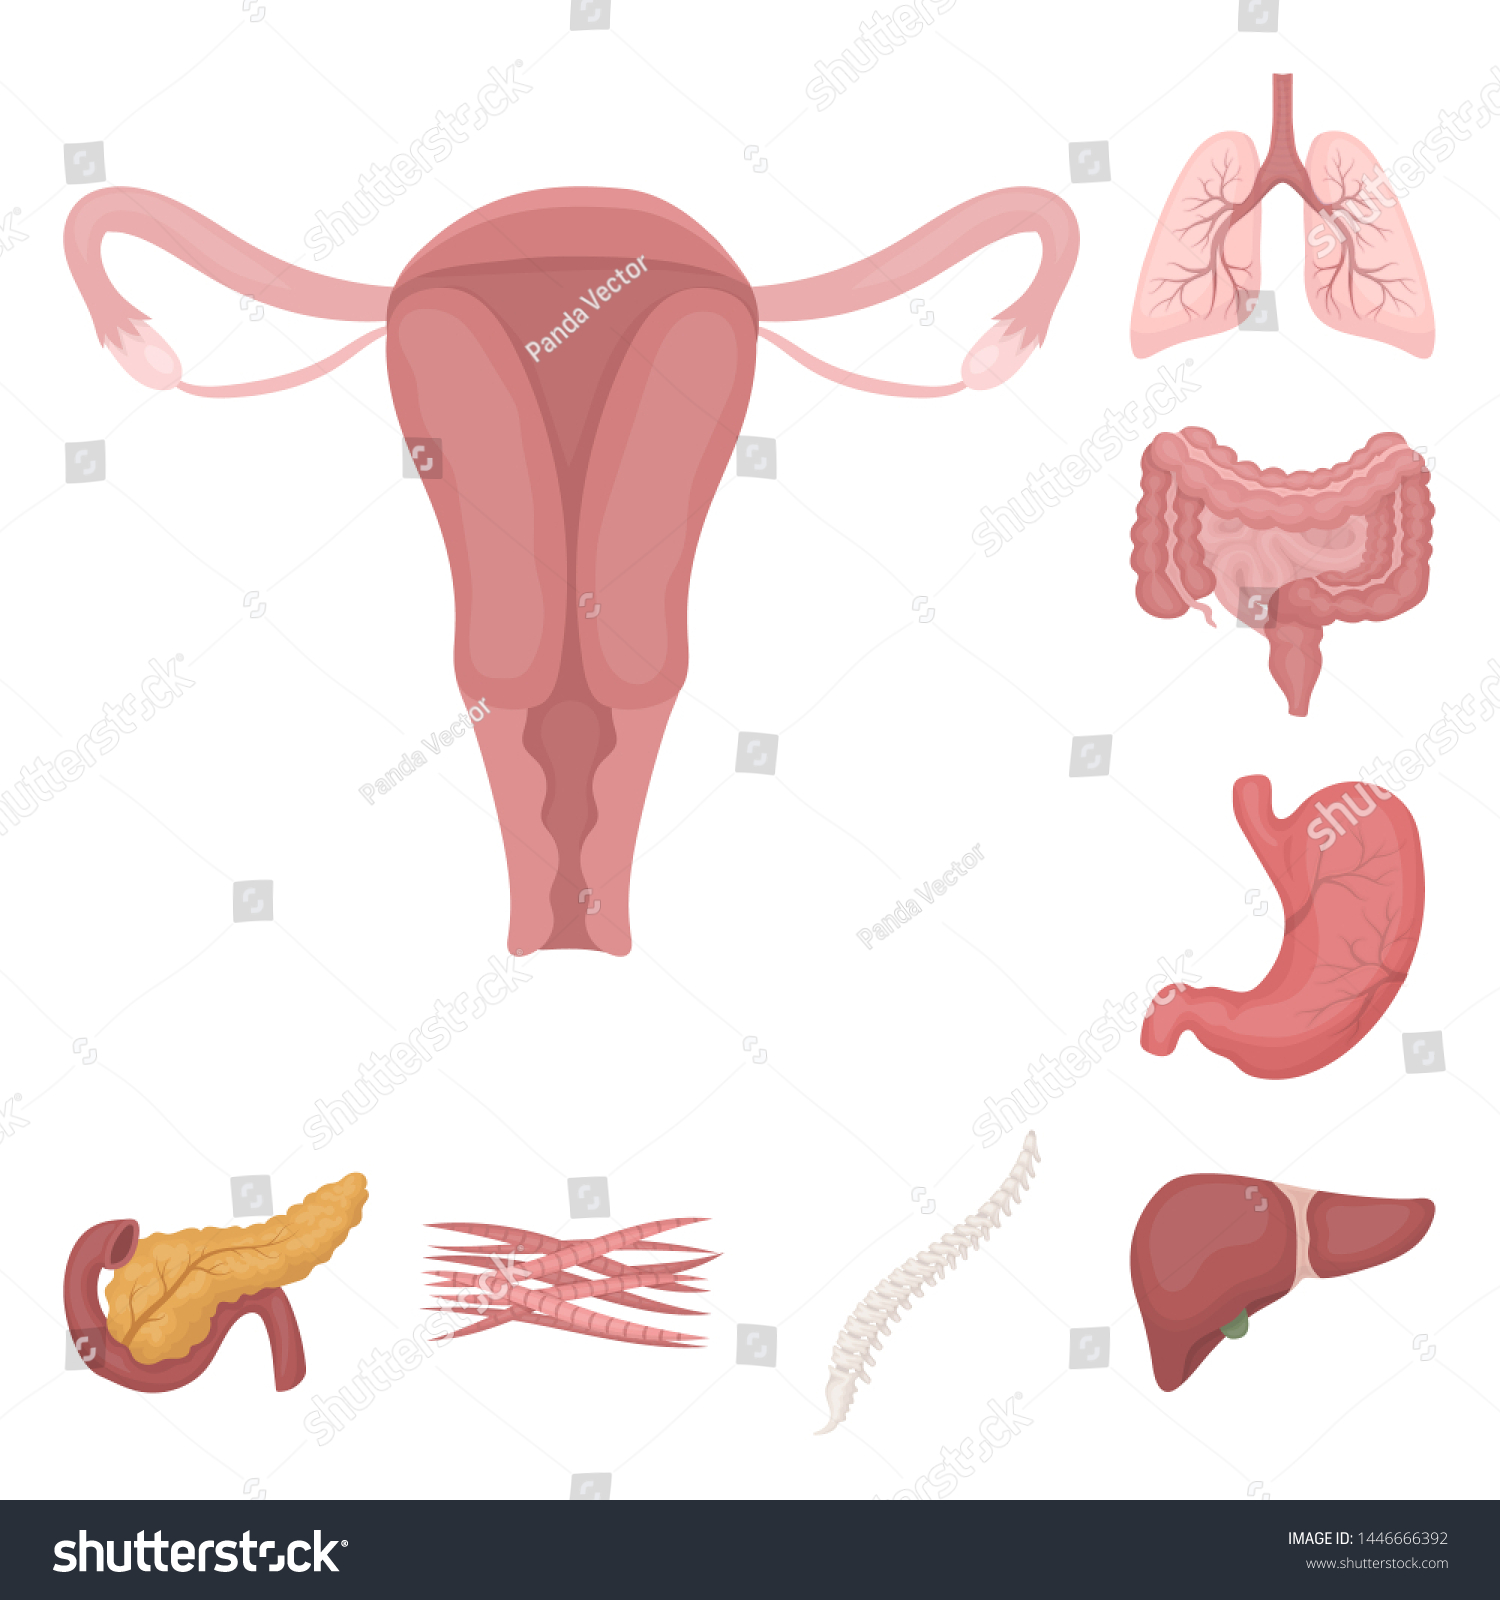 Internal Organs Human Cartoon Icons Set Stock Illustration 1446666392 